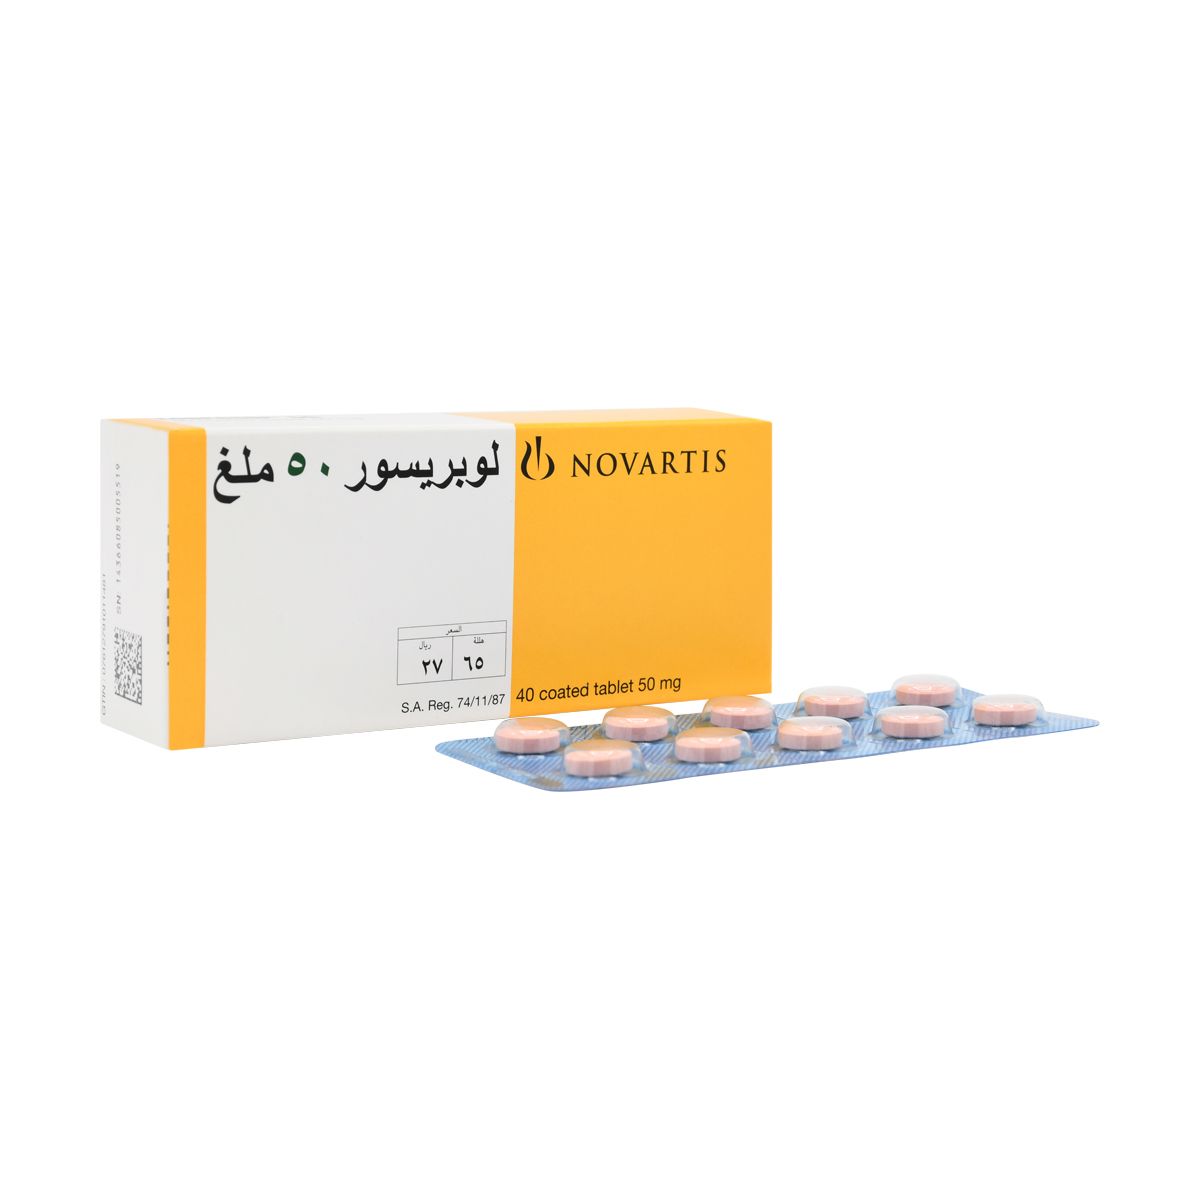 Lopresor 50 mg 40 Tab